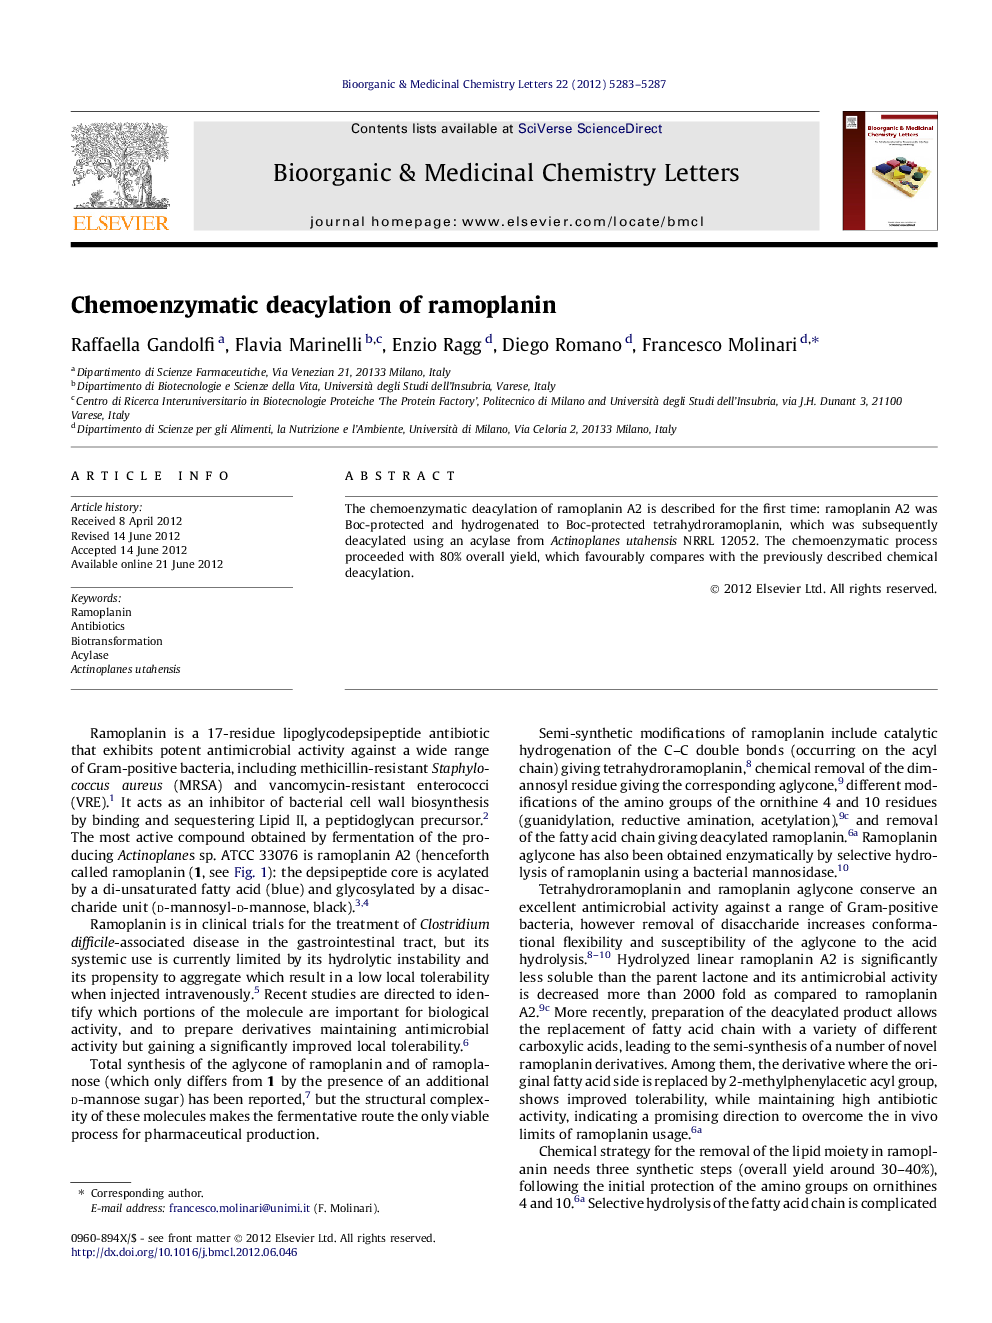 Chemoenzymatic deacylation of ramoplanin